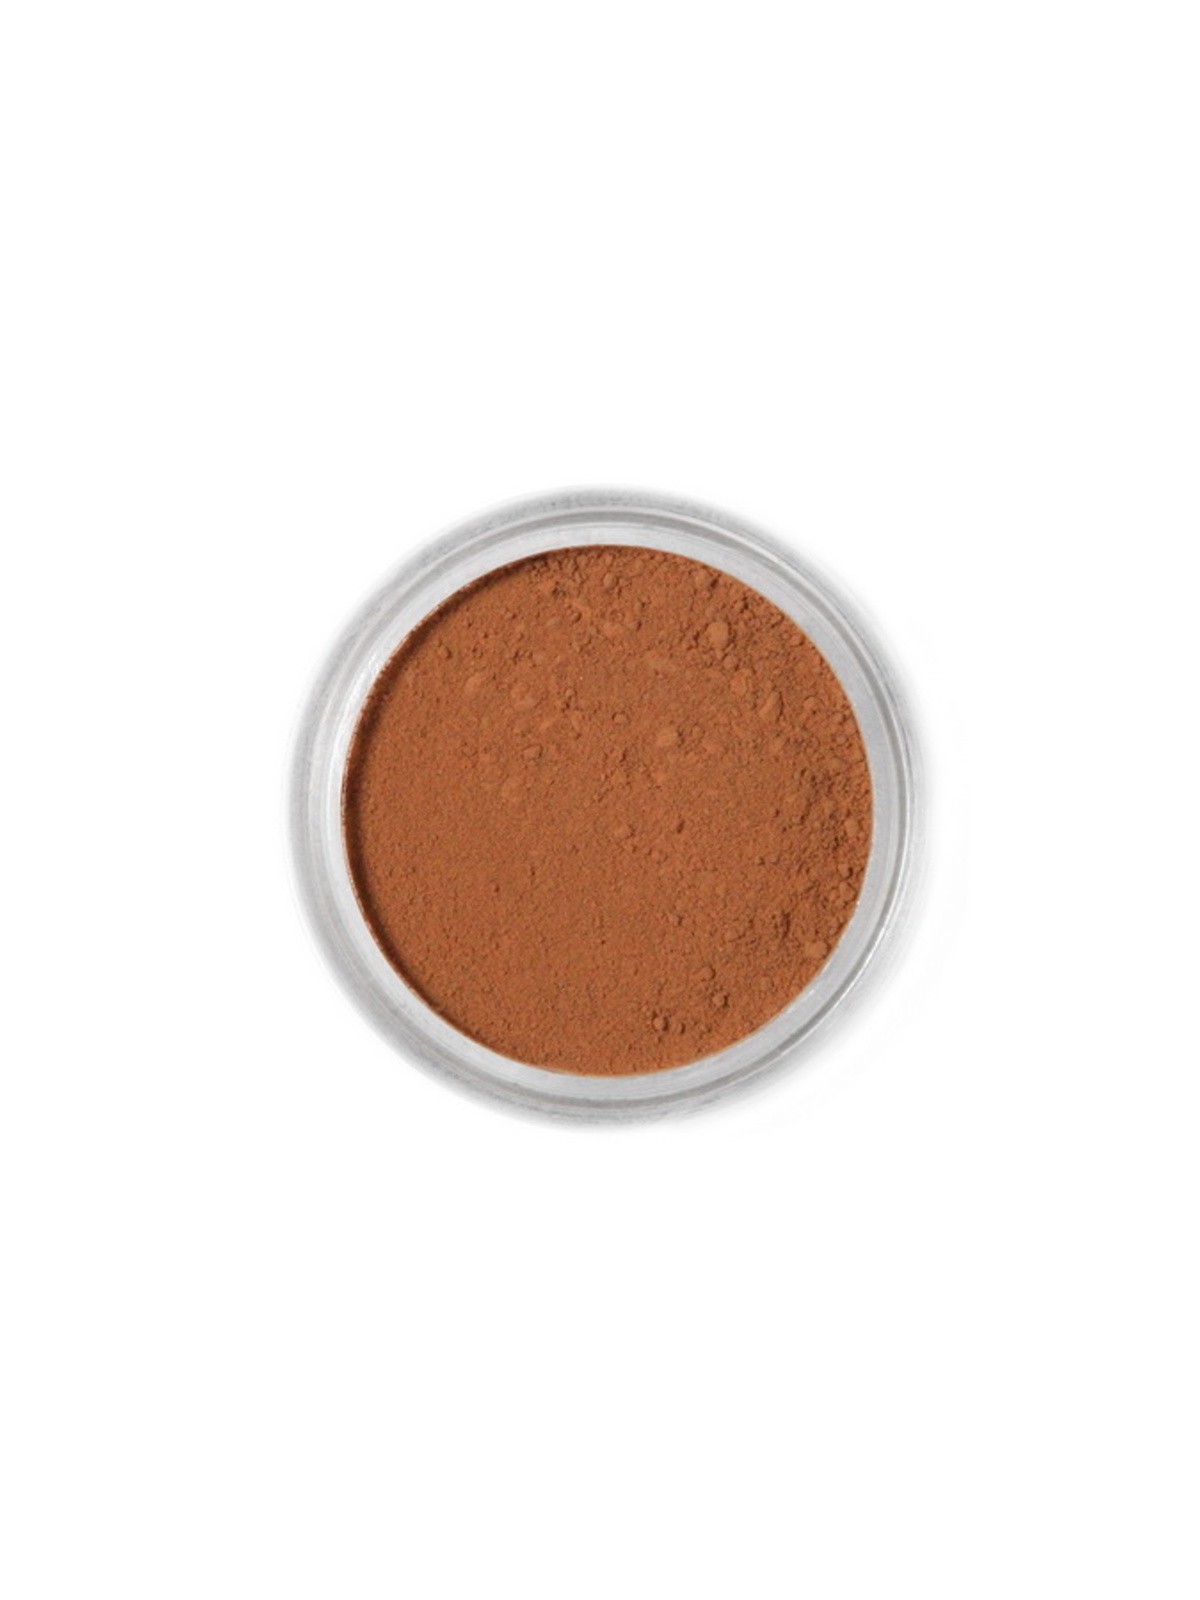 Essbaren Puderfarbe Fractal - Braun - Milk Chocolate, Tejcsokoládé (1,5 g)